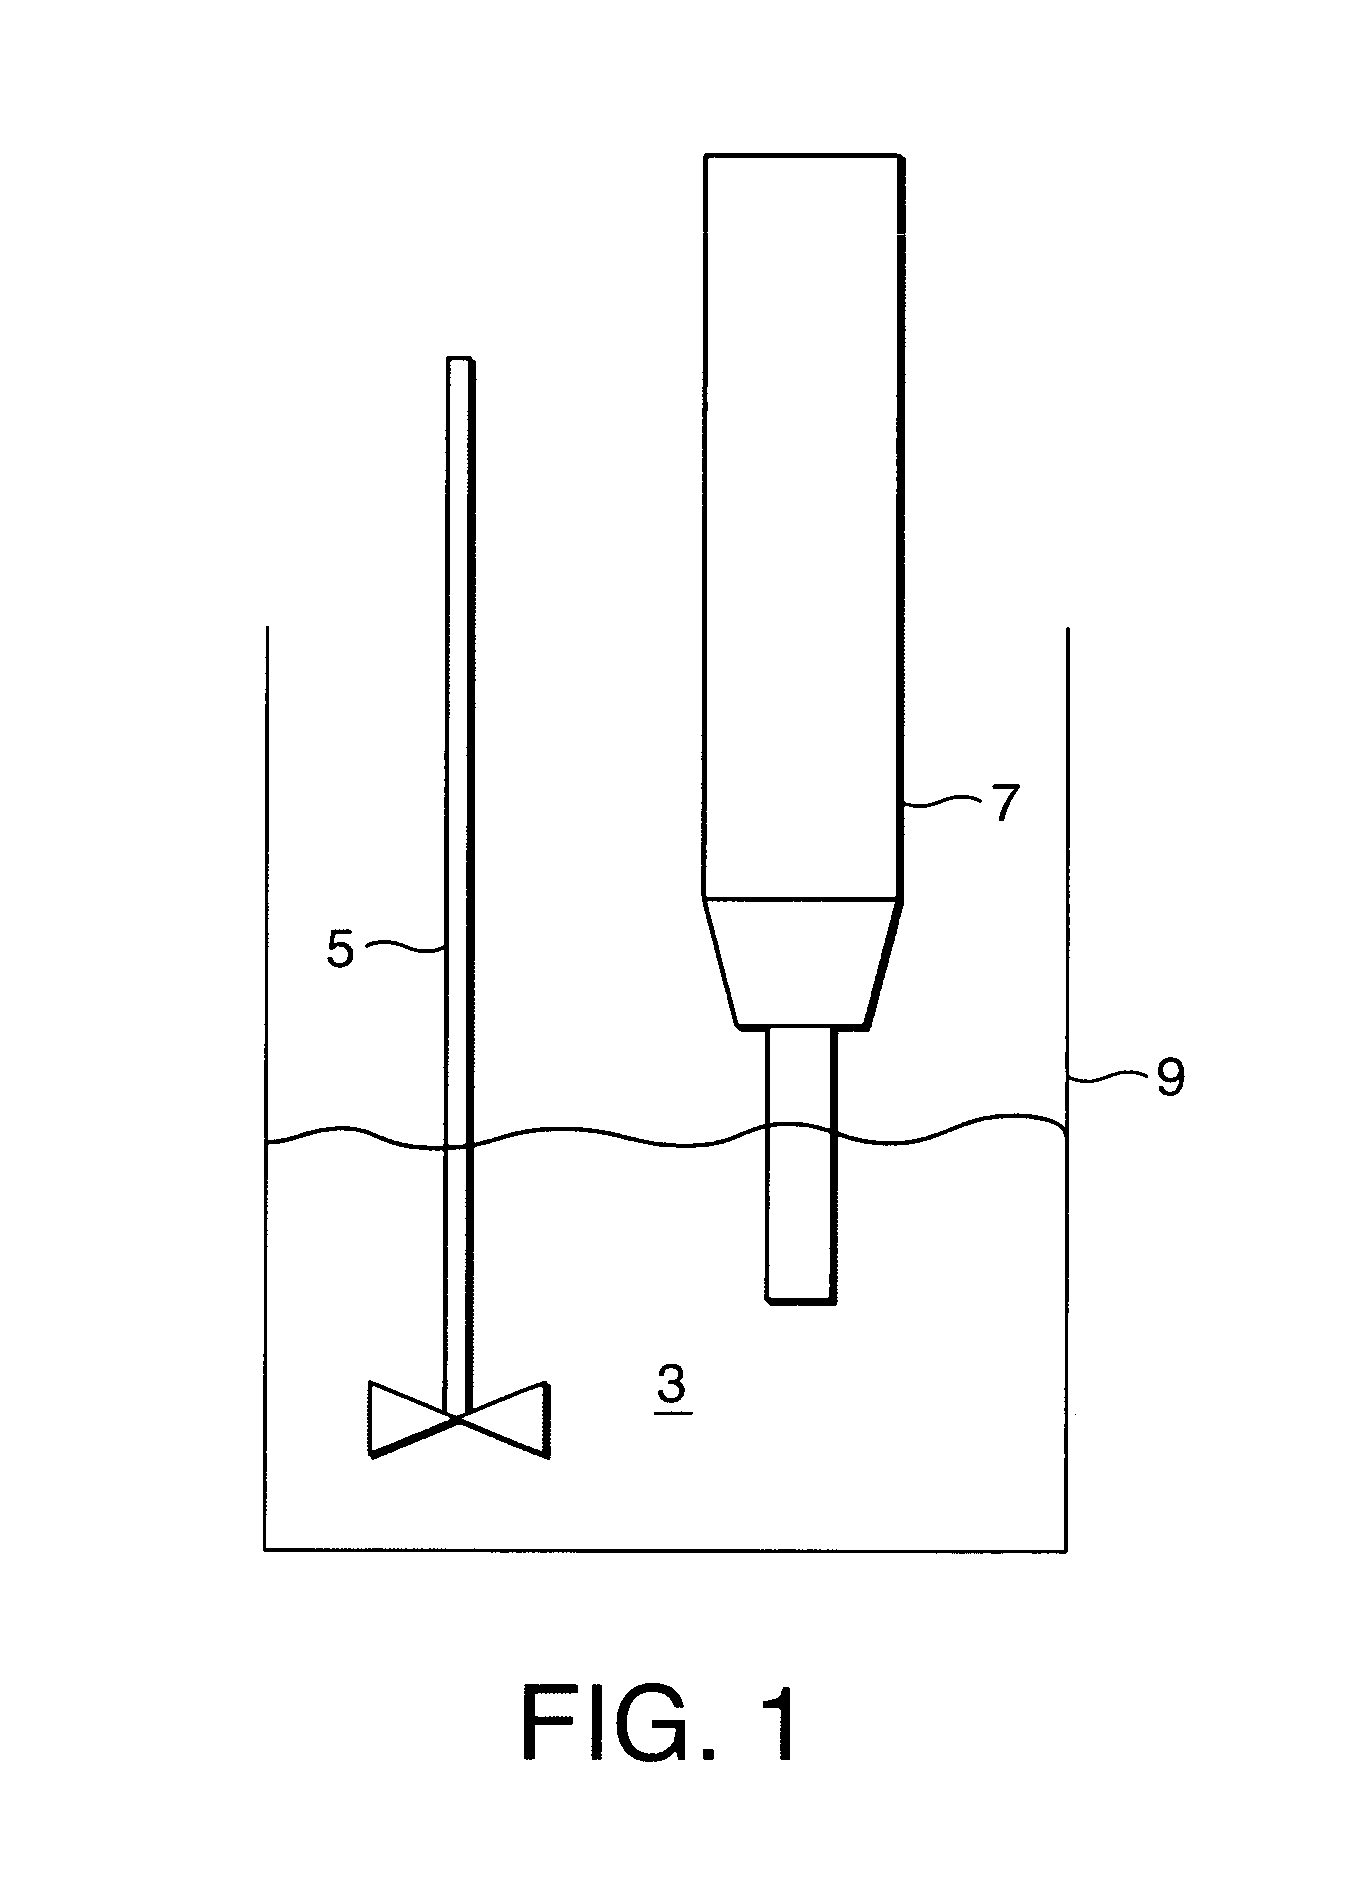 Method of making electroluminescent phosphor using sonochemistry